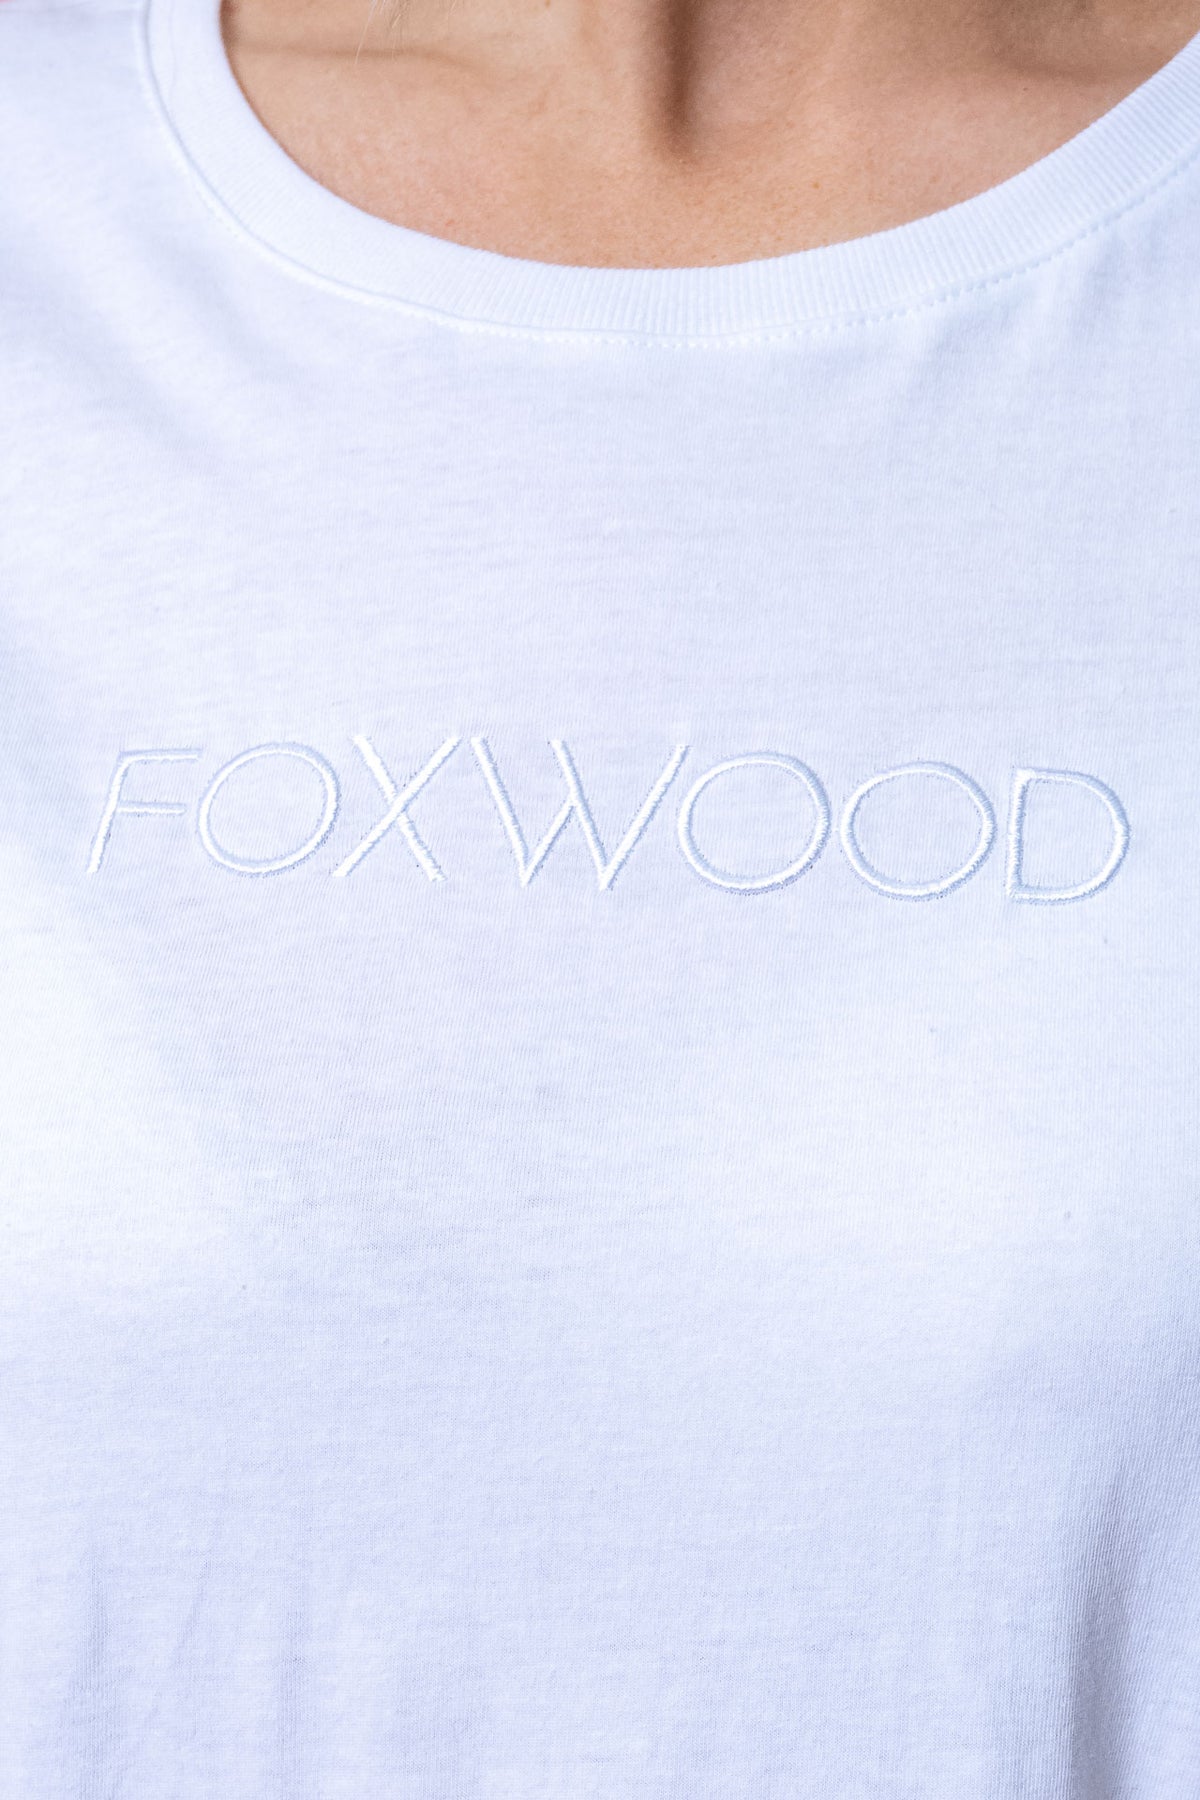 Foxwood Tee in White - Foxwood